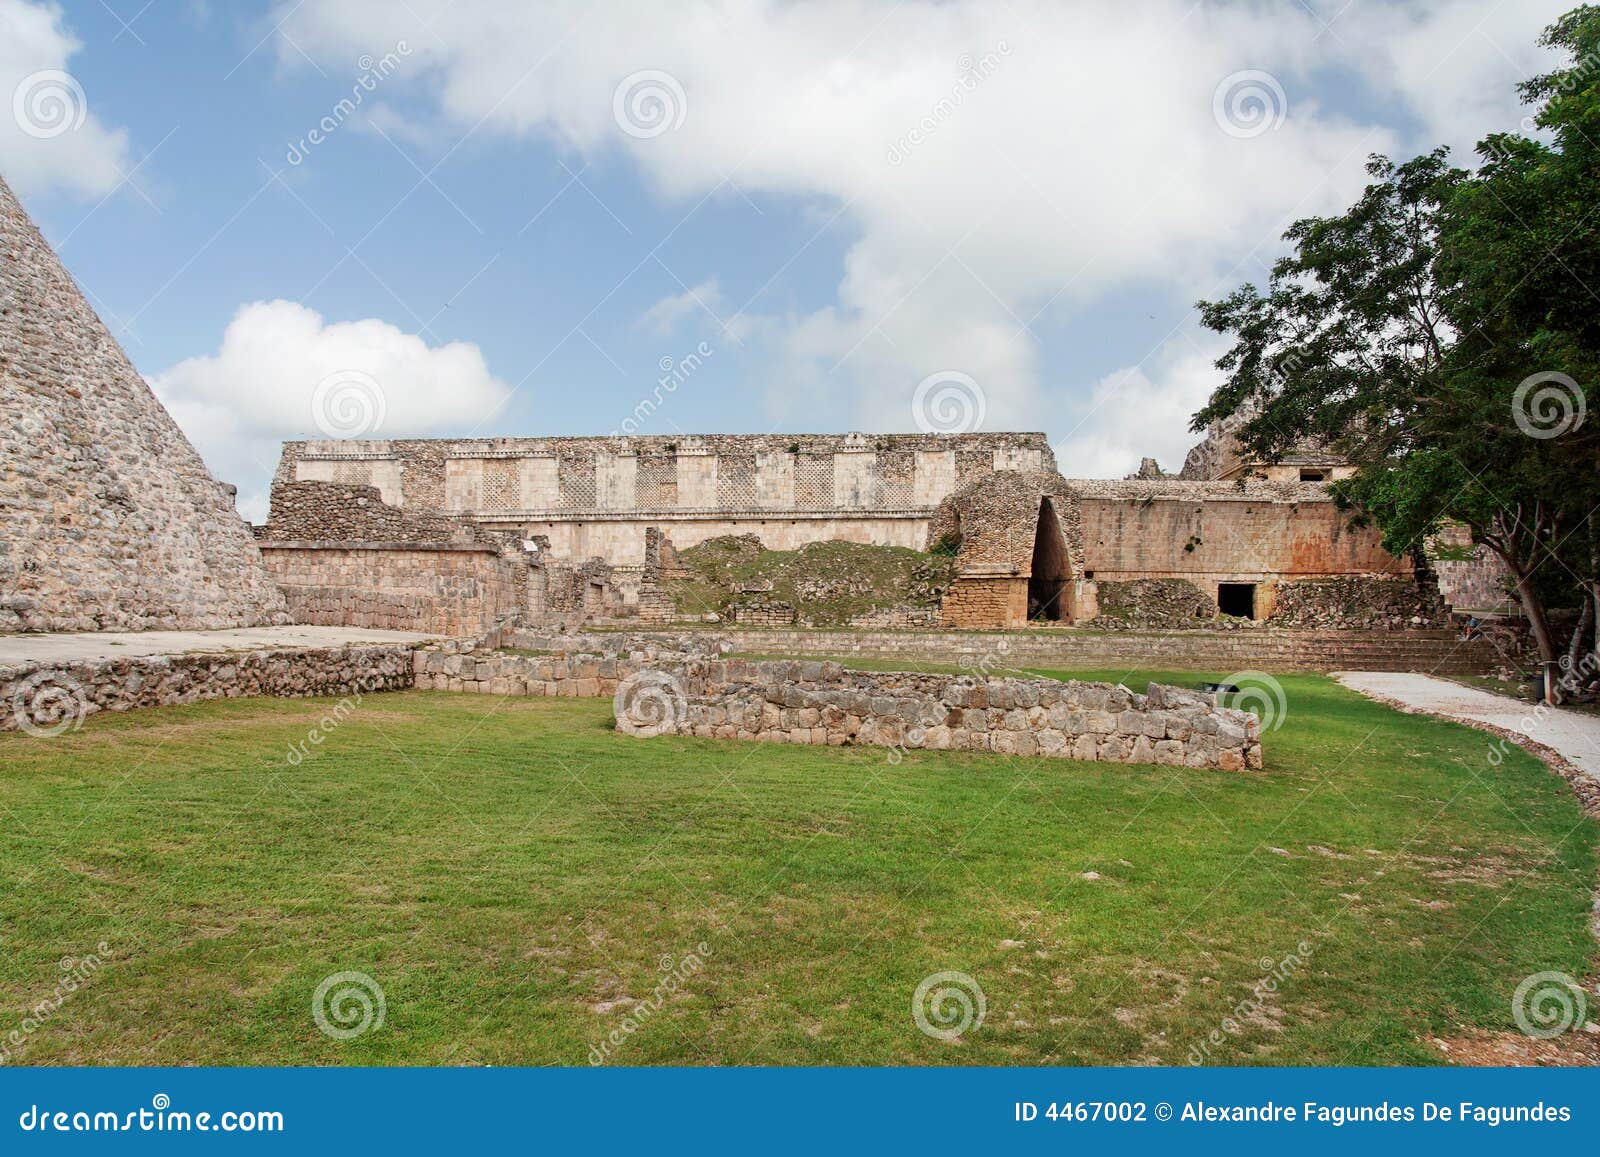 uxmal archaeological site yucatan mexico